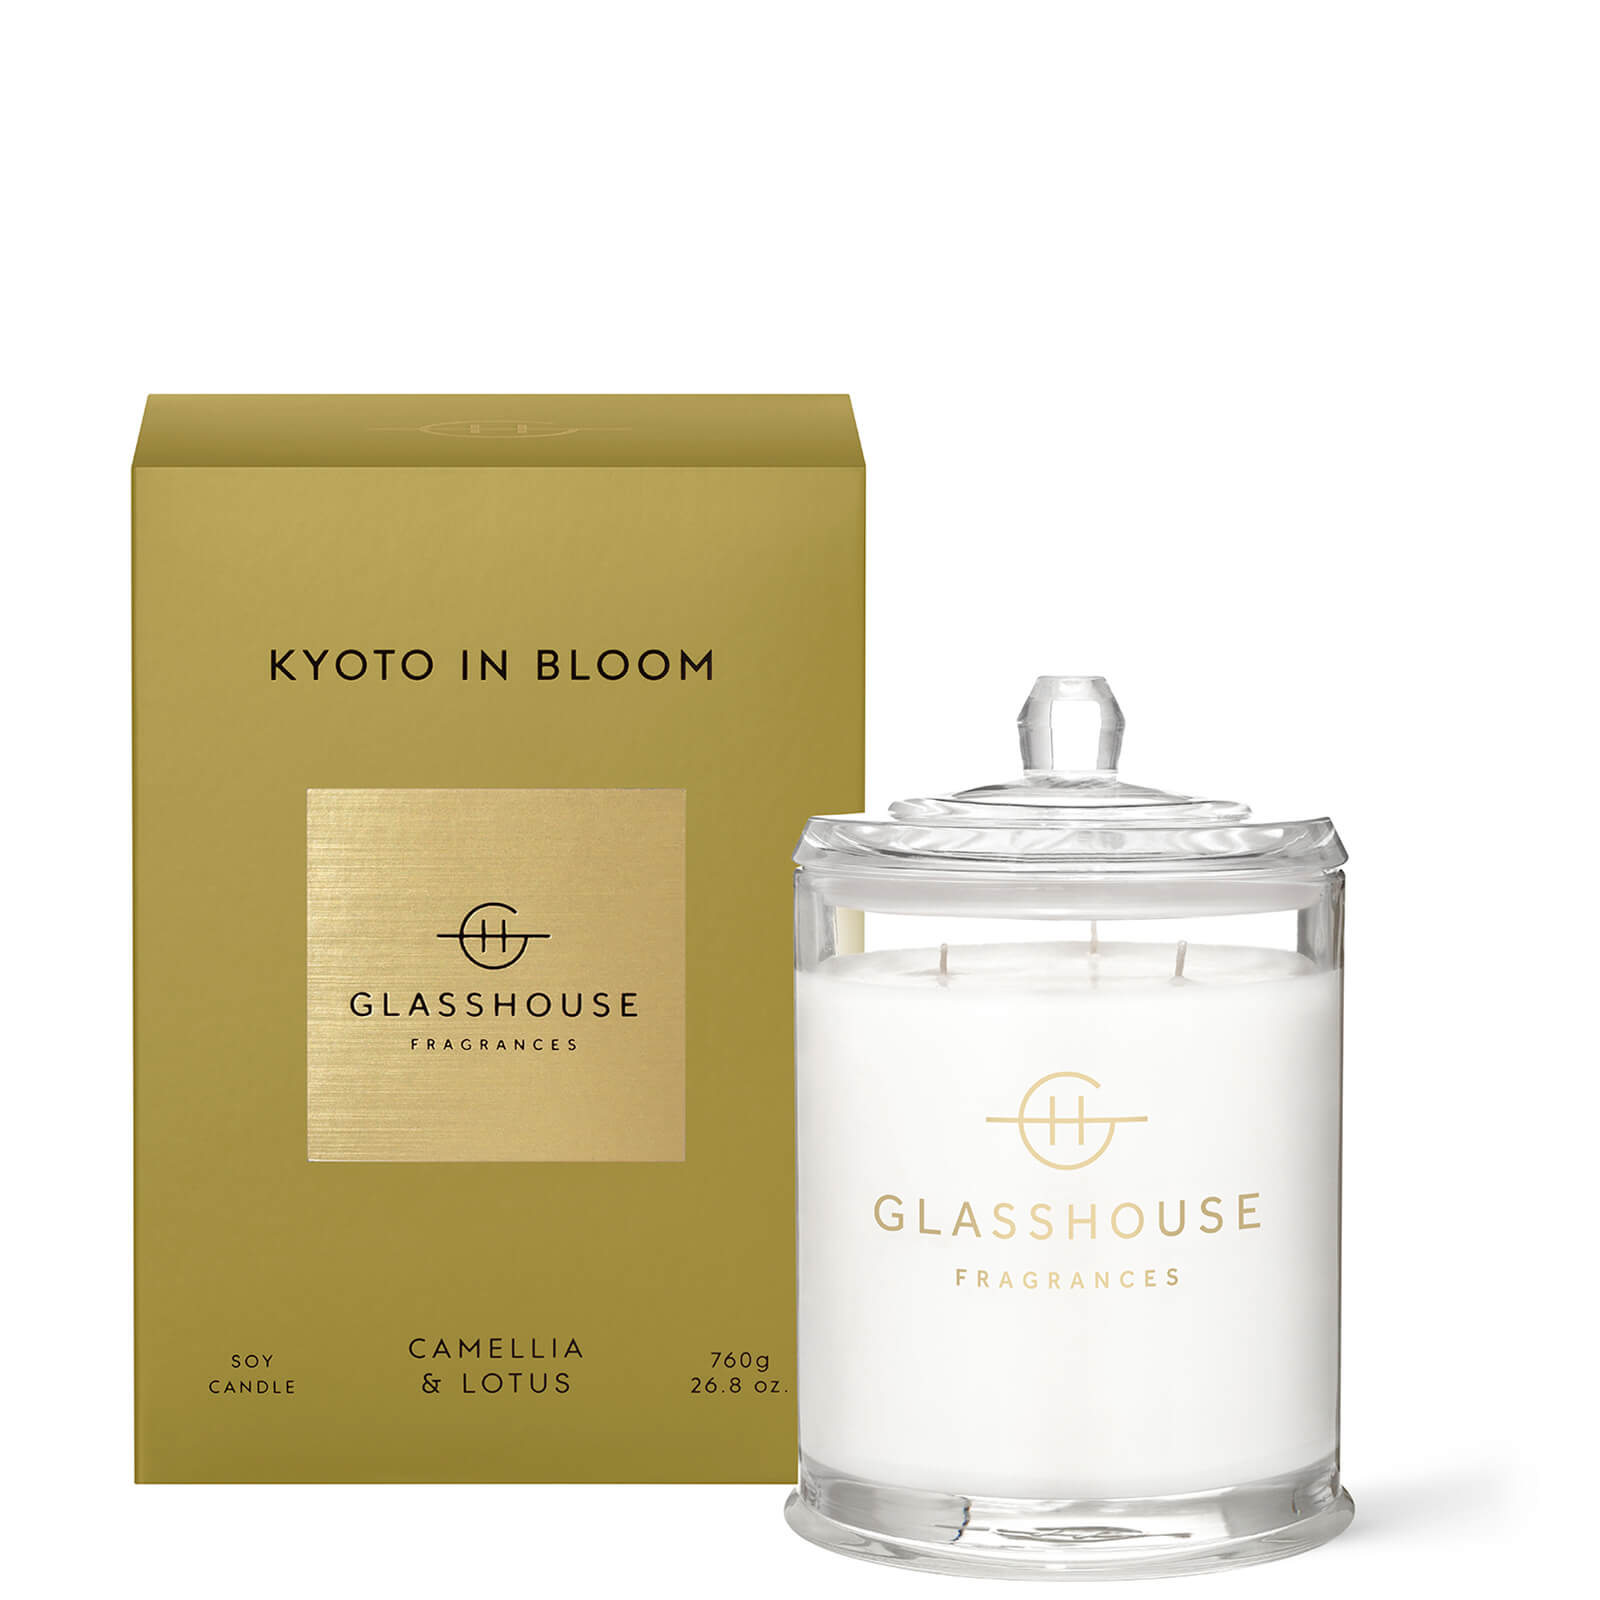 Glasshouse Fragrances Glasshouse Kyoto in Bloom Candle 760g